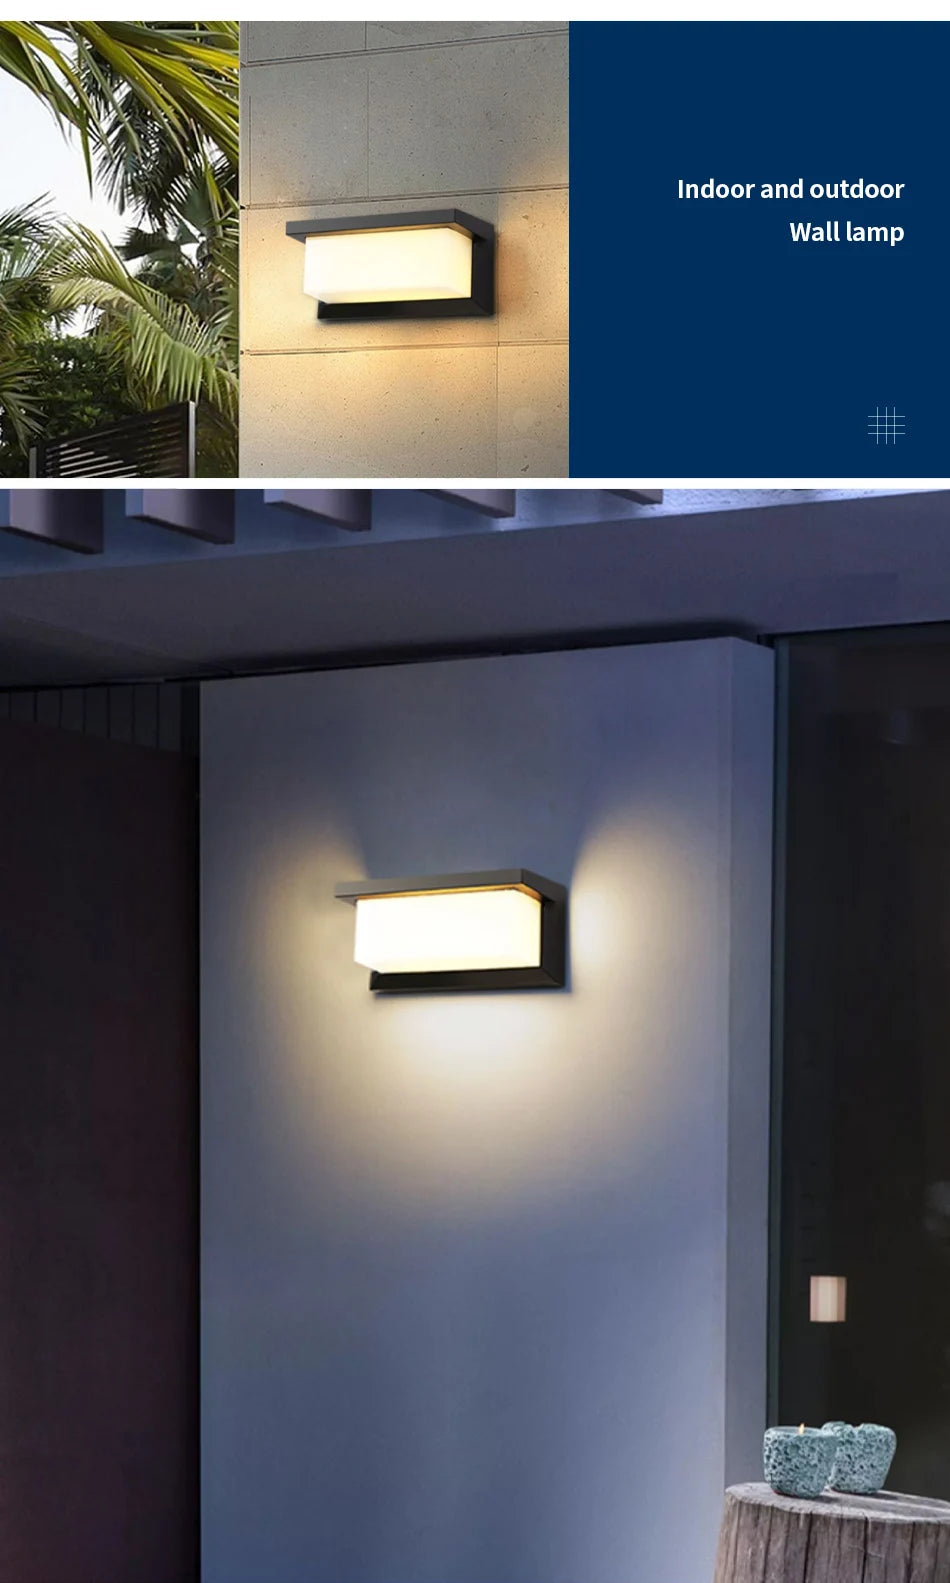 Led Wall Light, Autonomous light control that adjusts brightness based on surrounding ambient light.